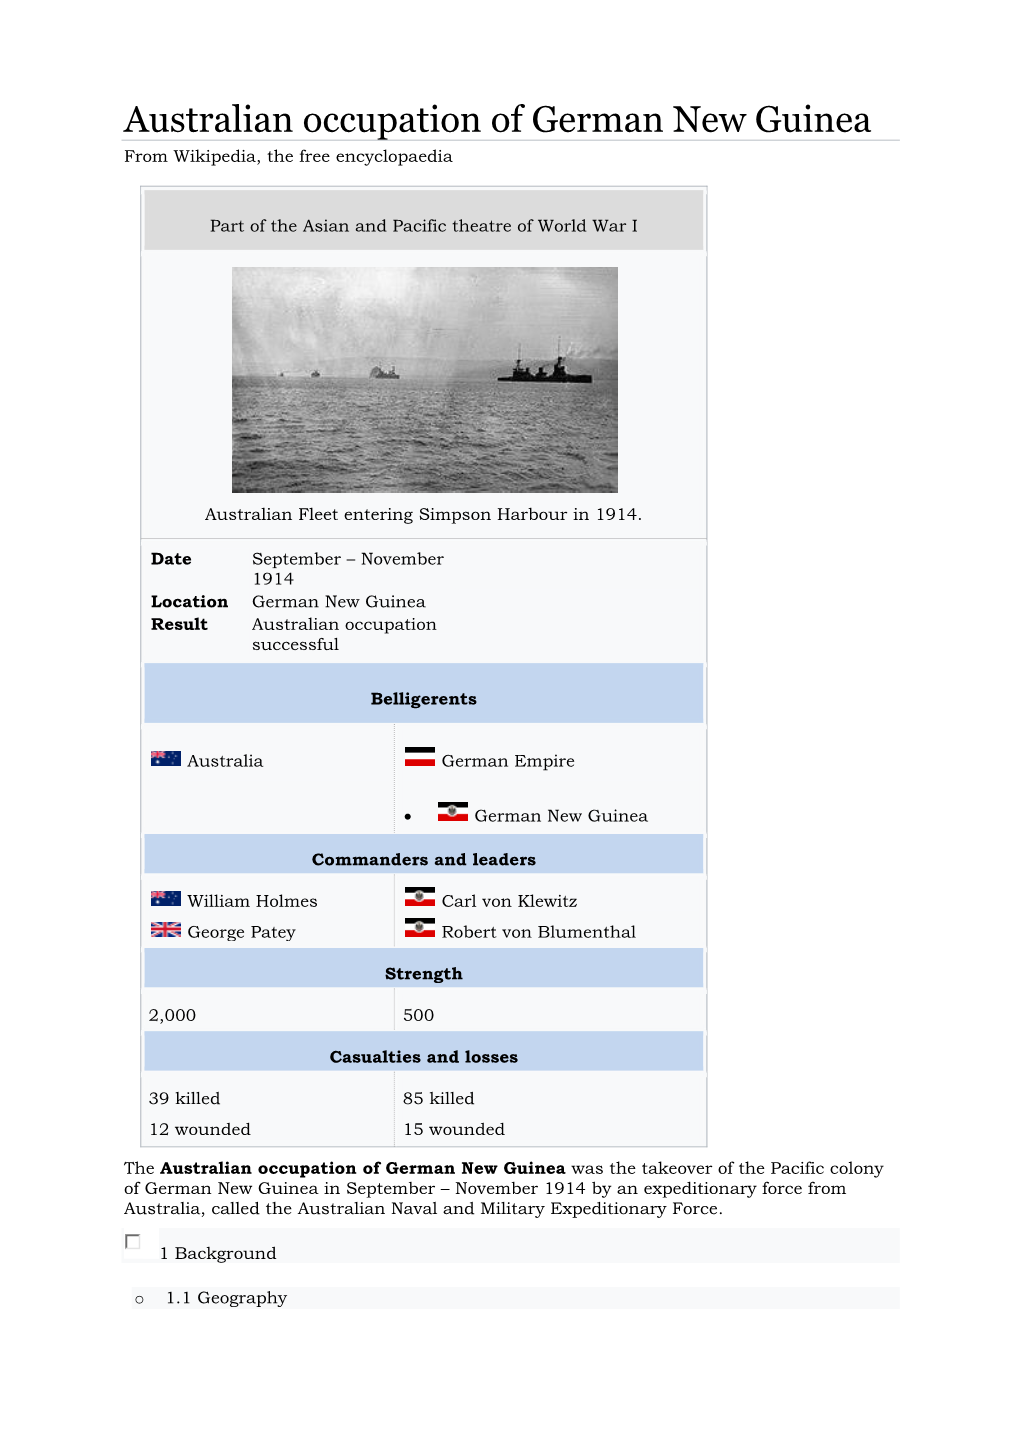 Australian Occupation of German New Guinea from Wikipedia, the Free Encyclopaedia